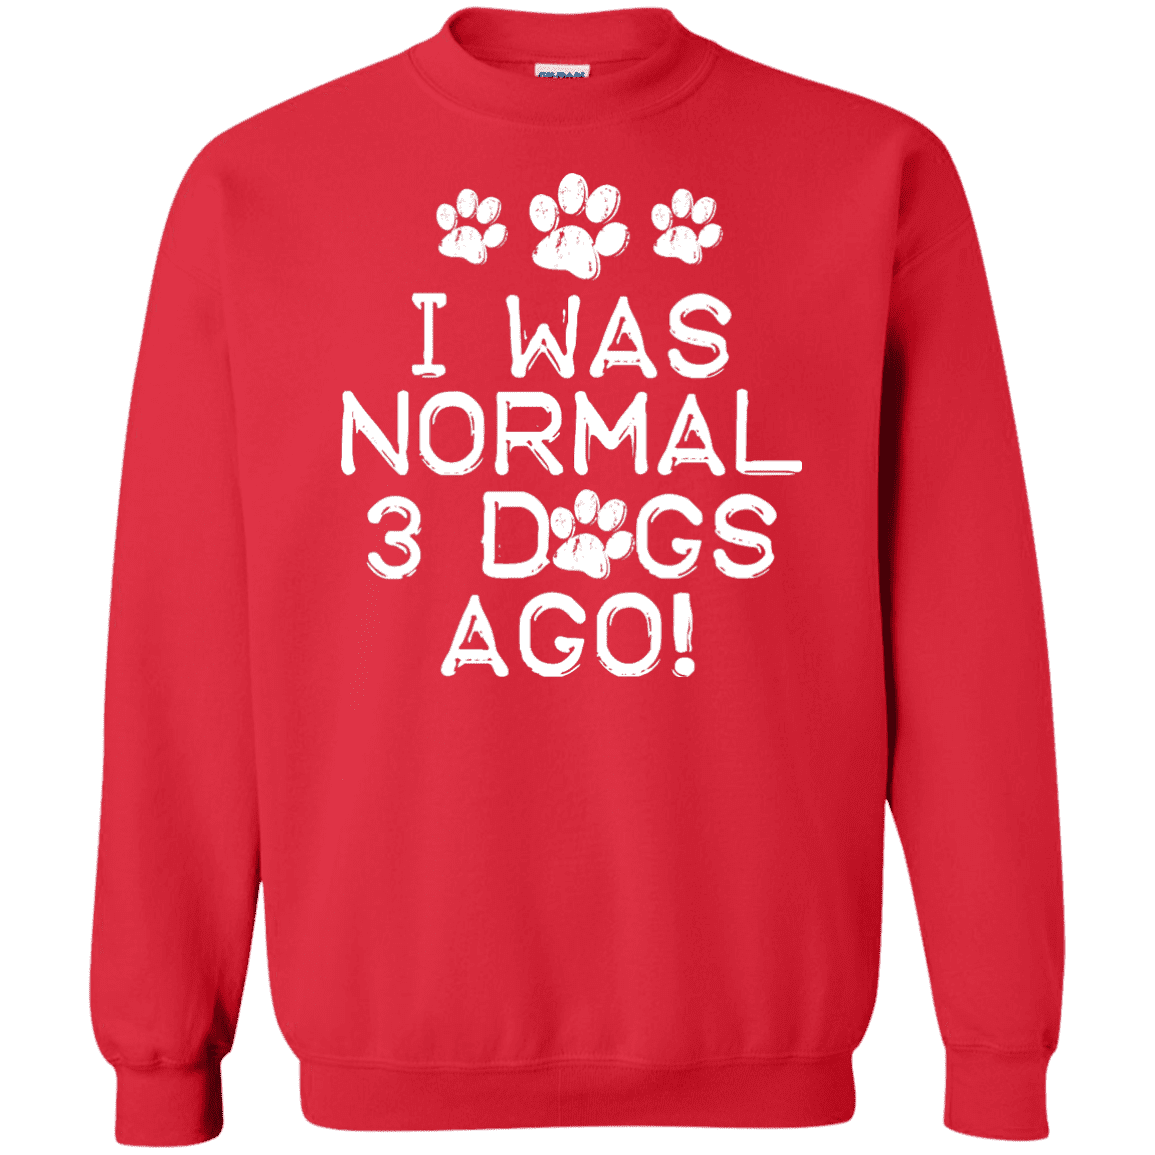 I Was Normal Dogs - Sweatshirt.